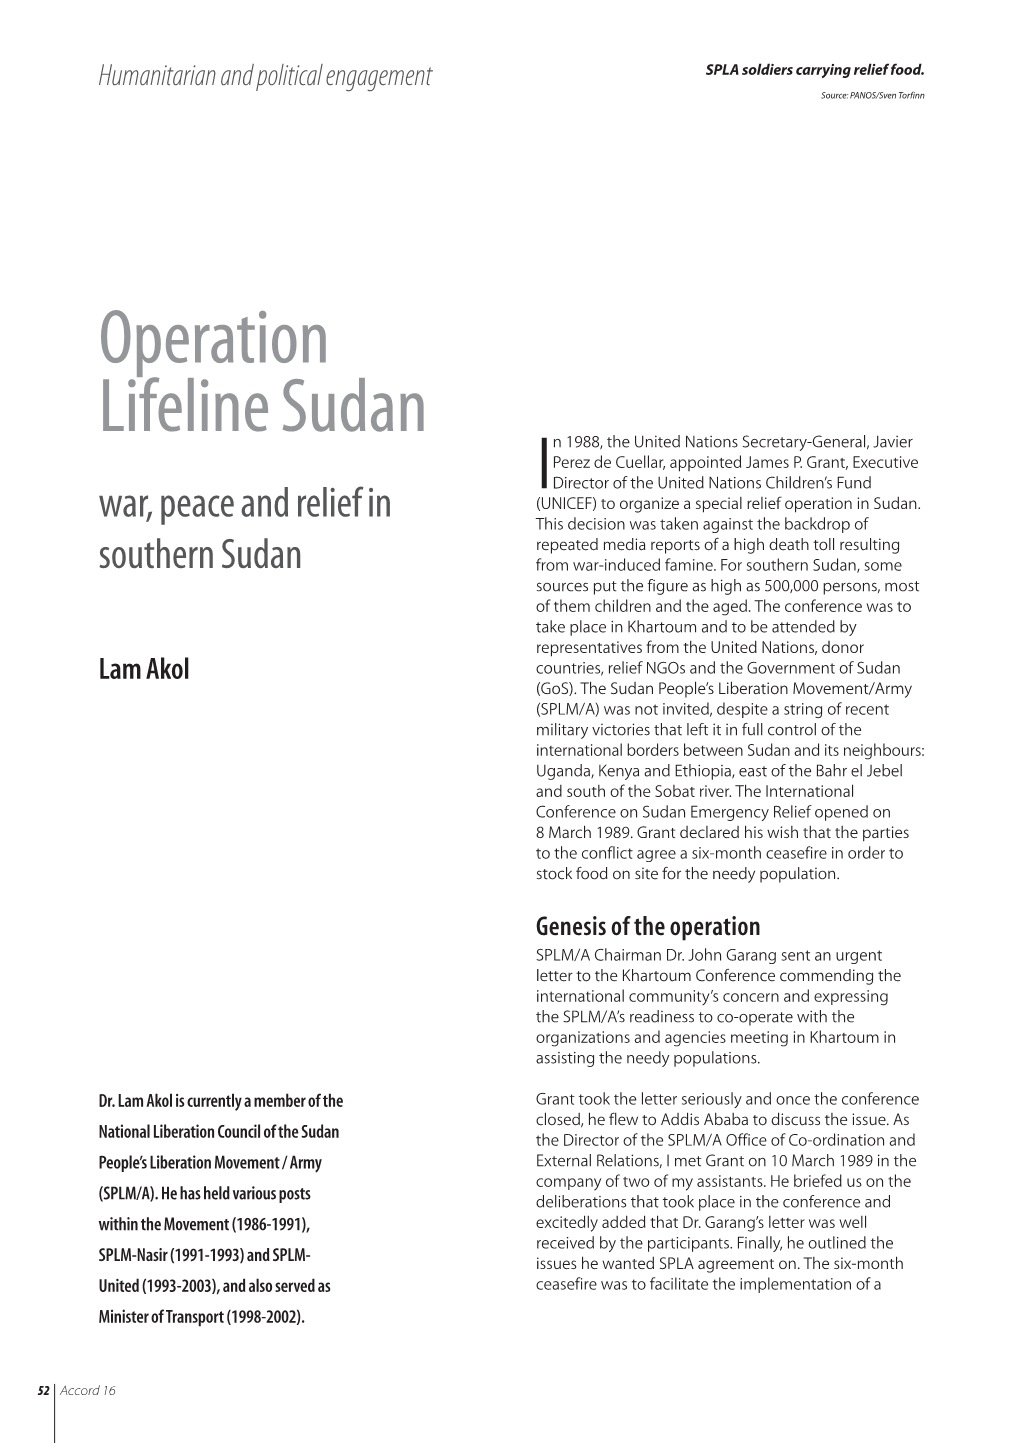 Operation Lifeline Sudan N 1988, the United Nations Secretary-General, Javier Perez De Cuellar, Appointed James P